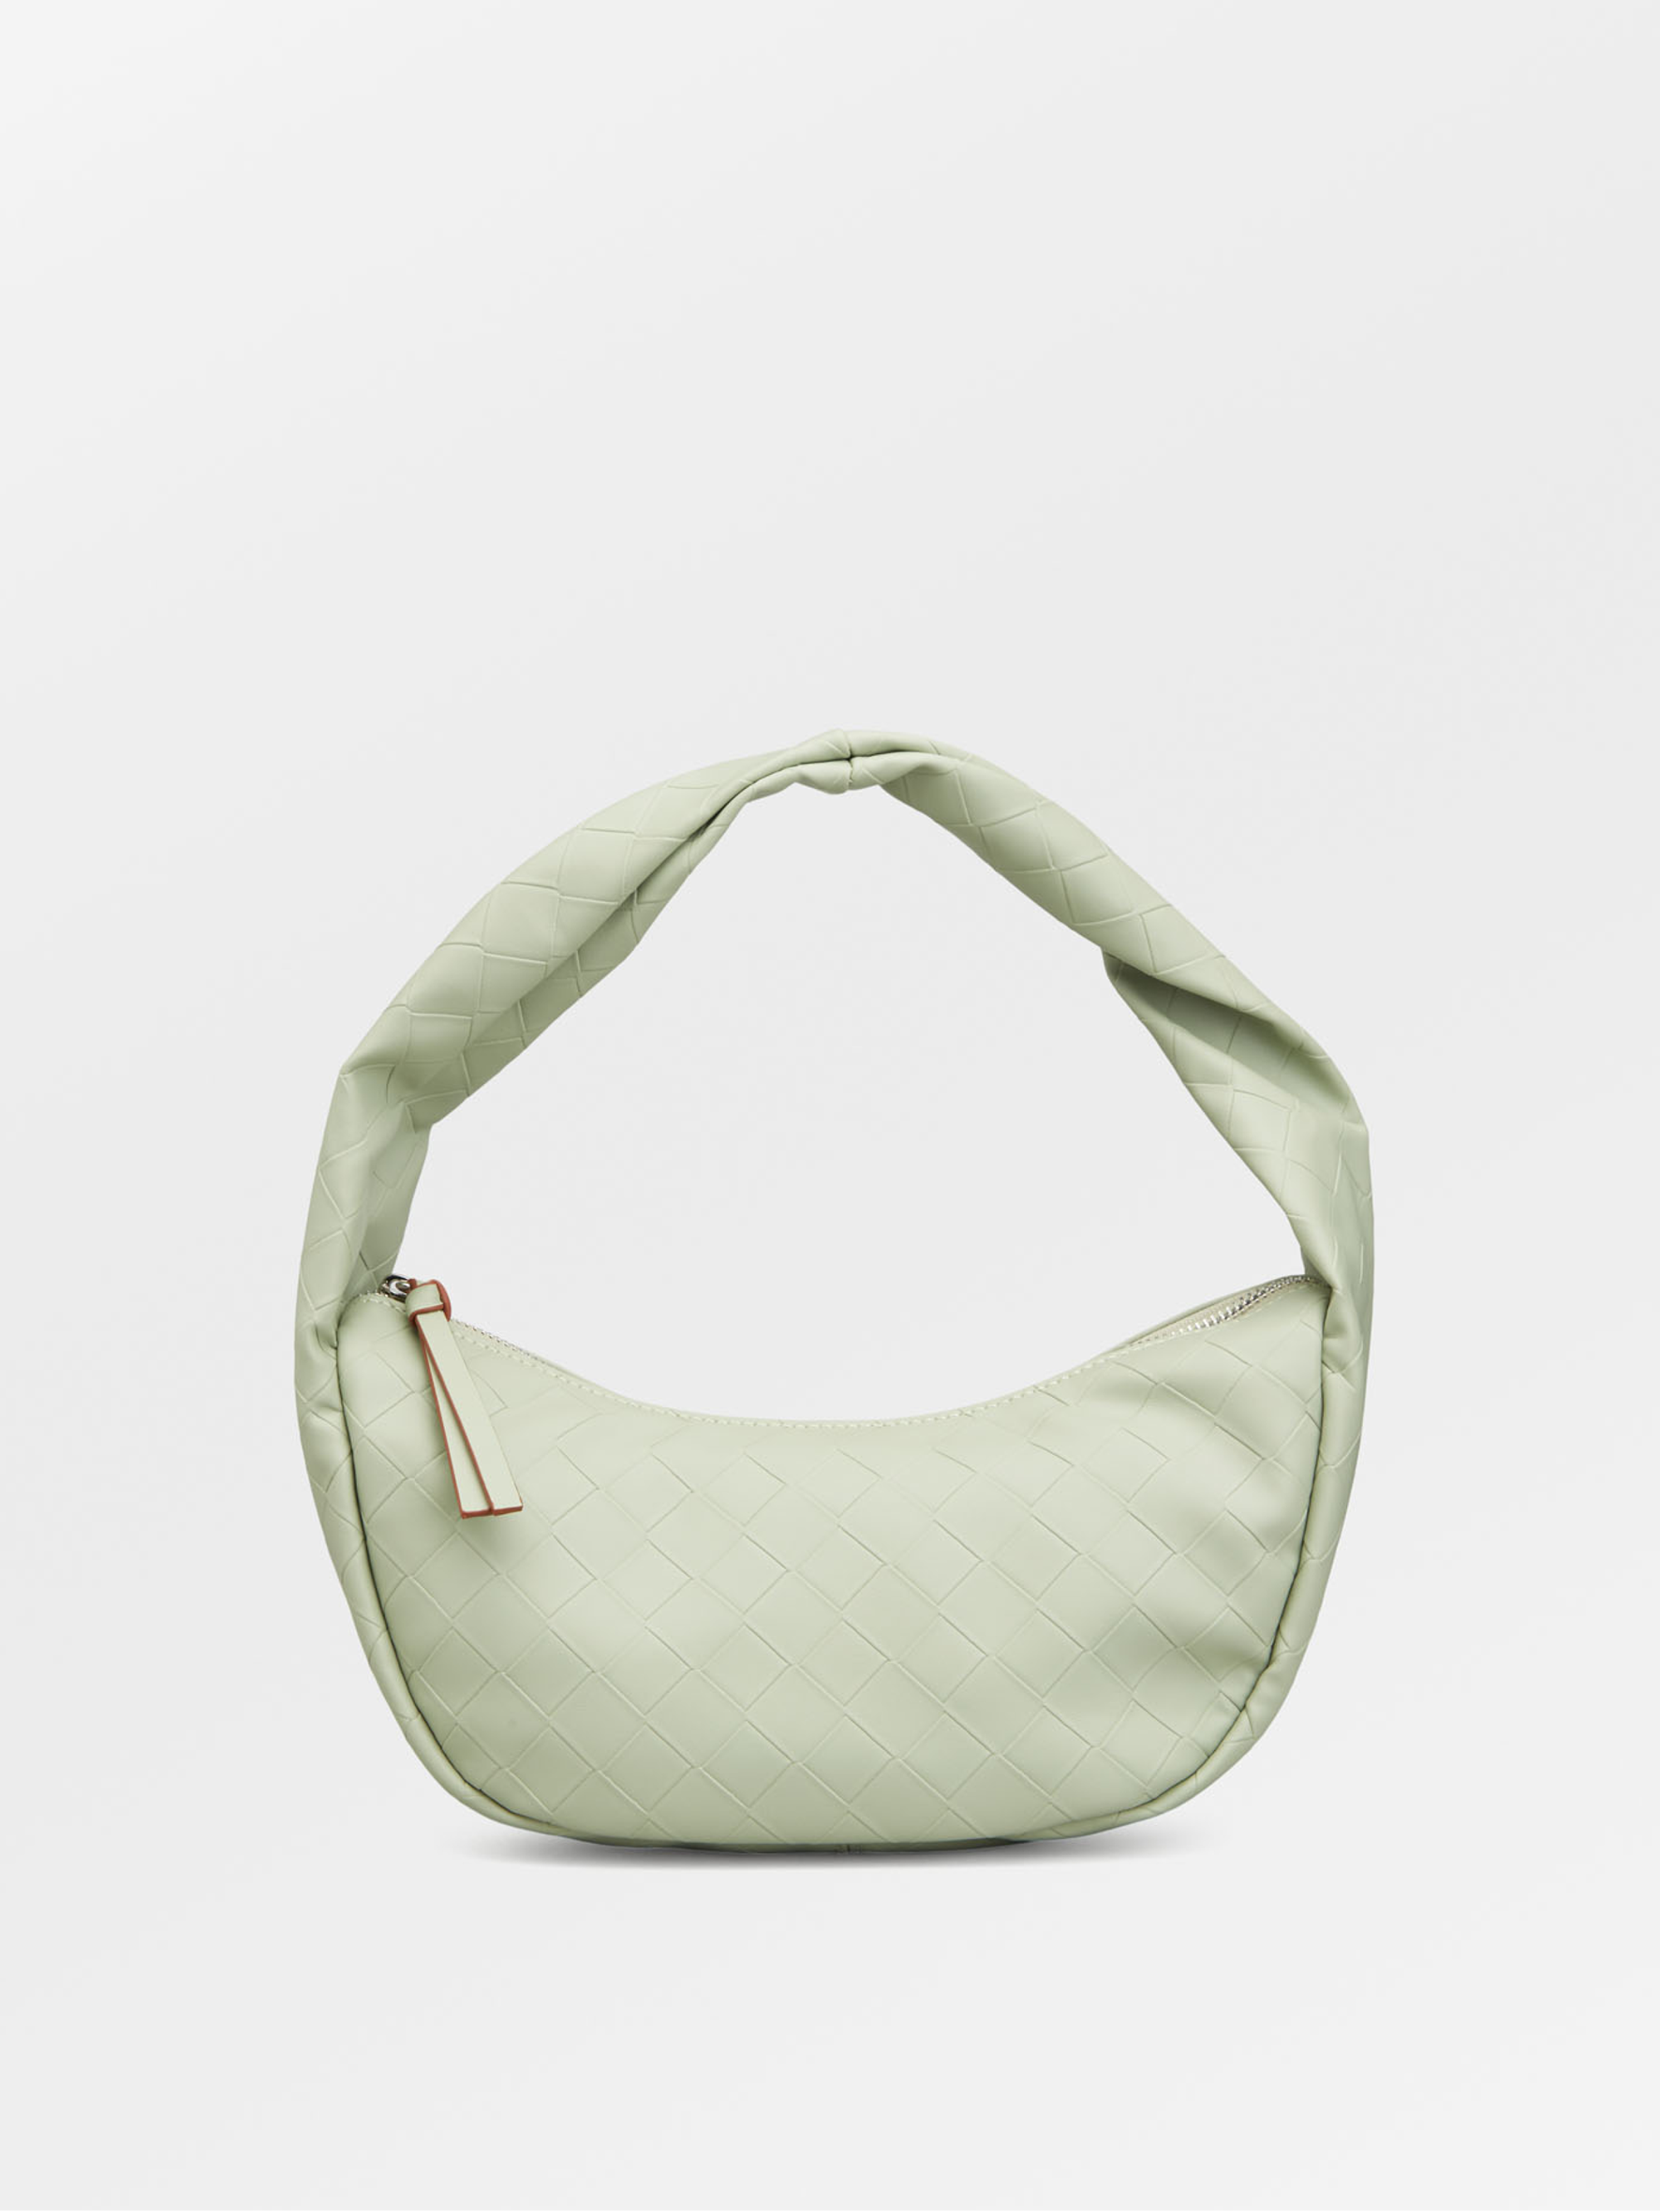 Becksöndergaard, Rallo XL Talia Bag - Desert Sage Green, bags, bags